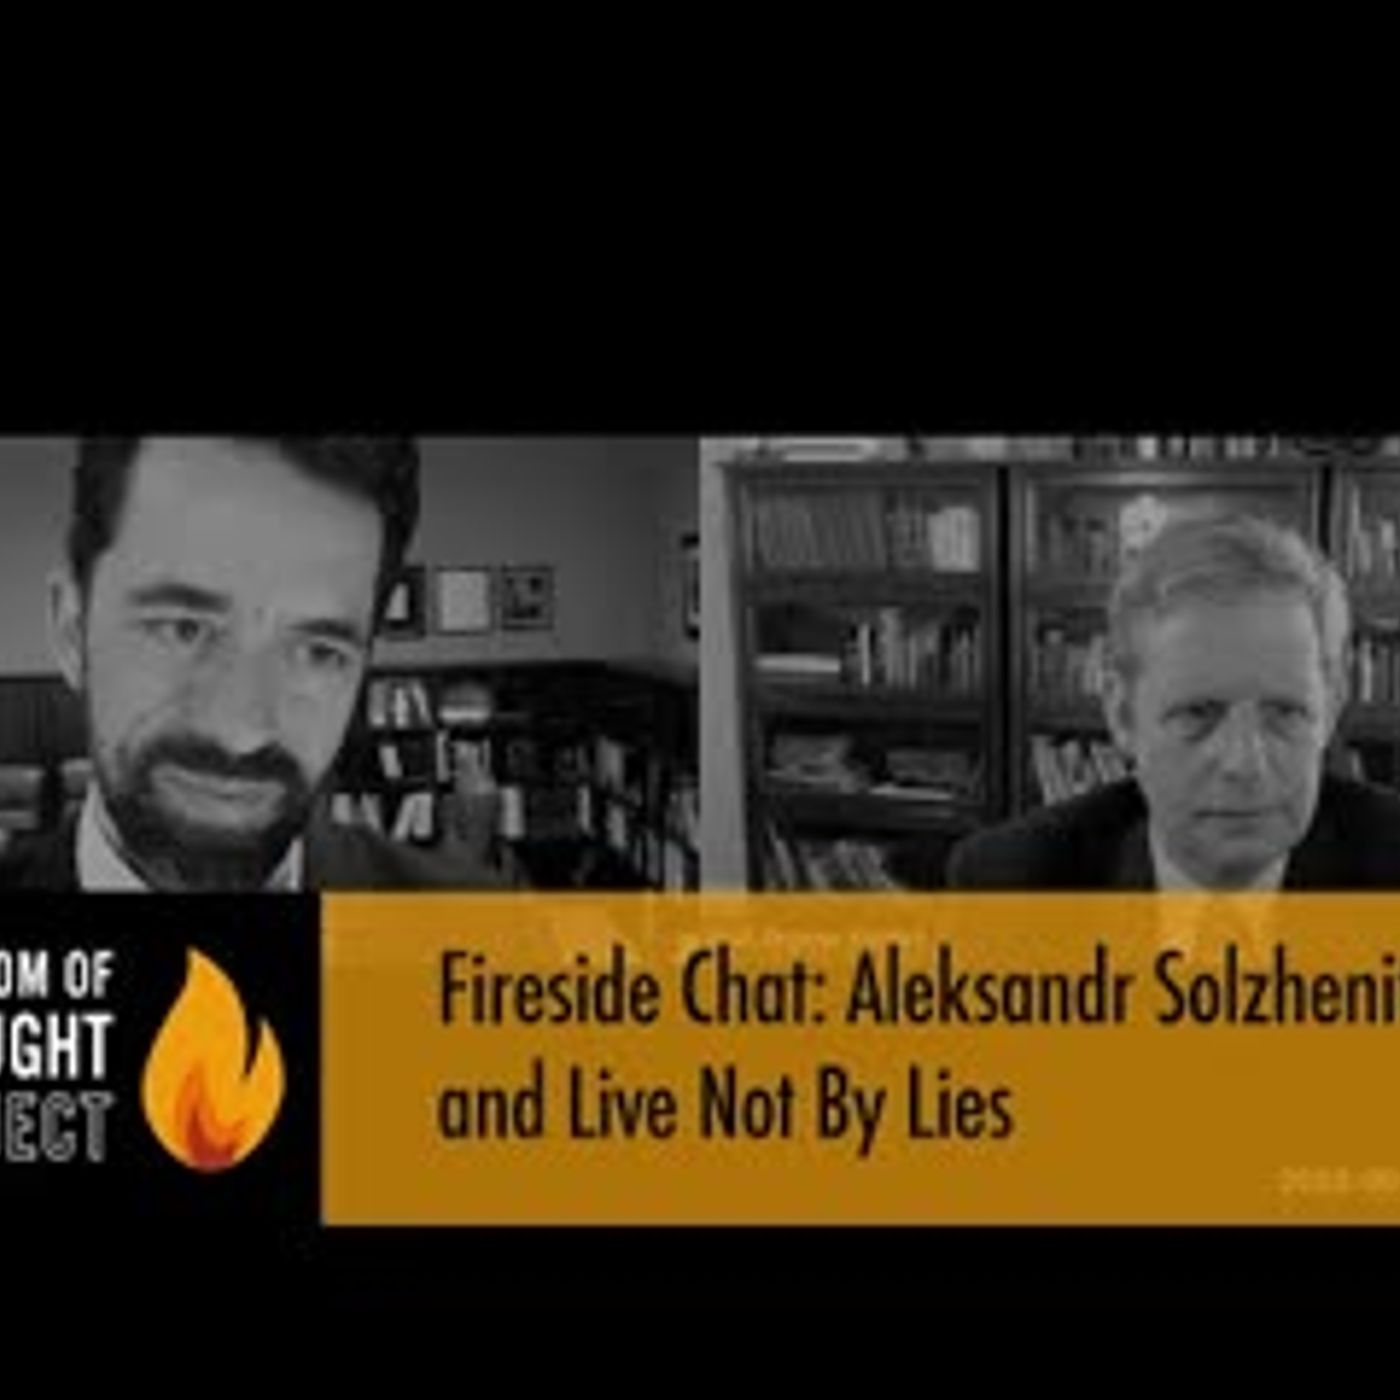 Fireside Chat: Aleksandr Solzhenitsyn and Live Not By Lies